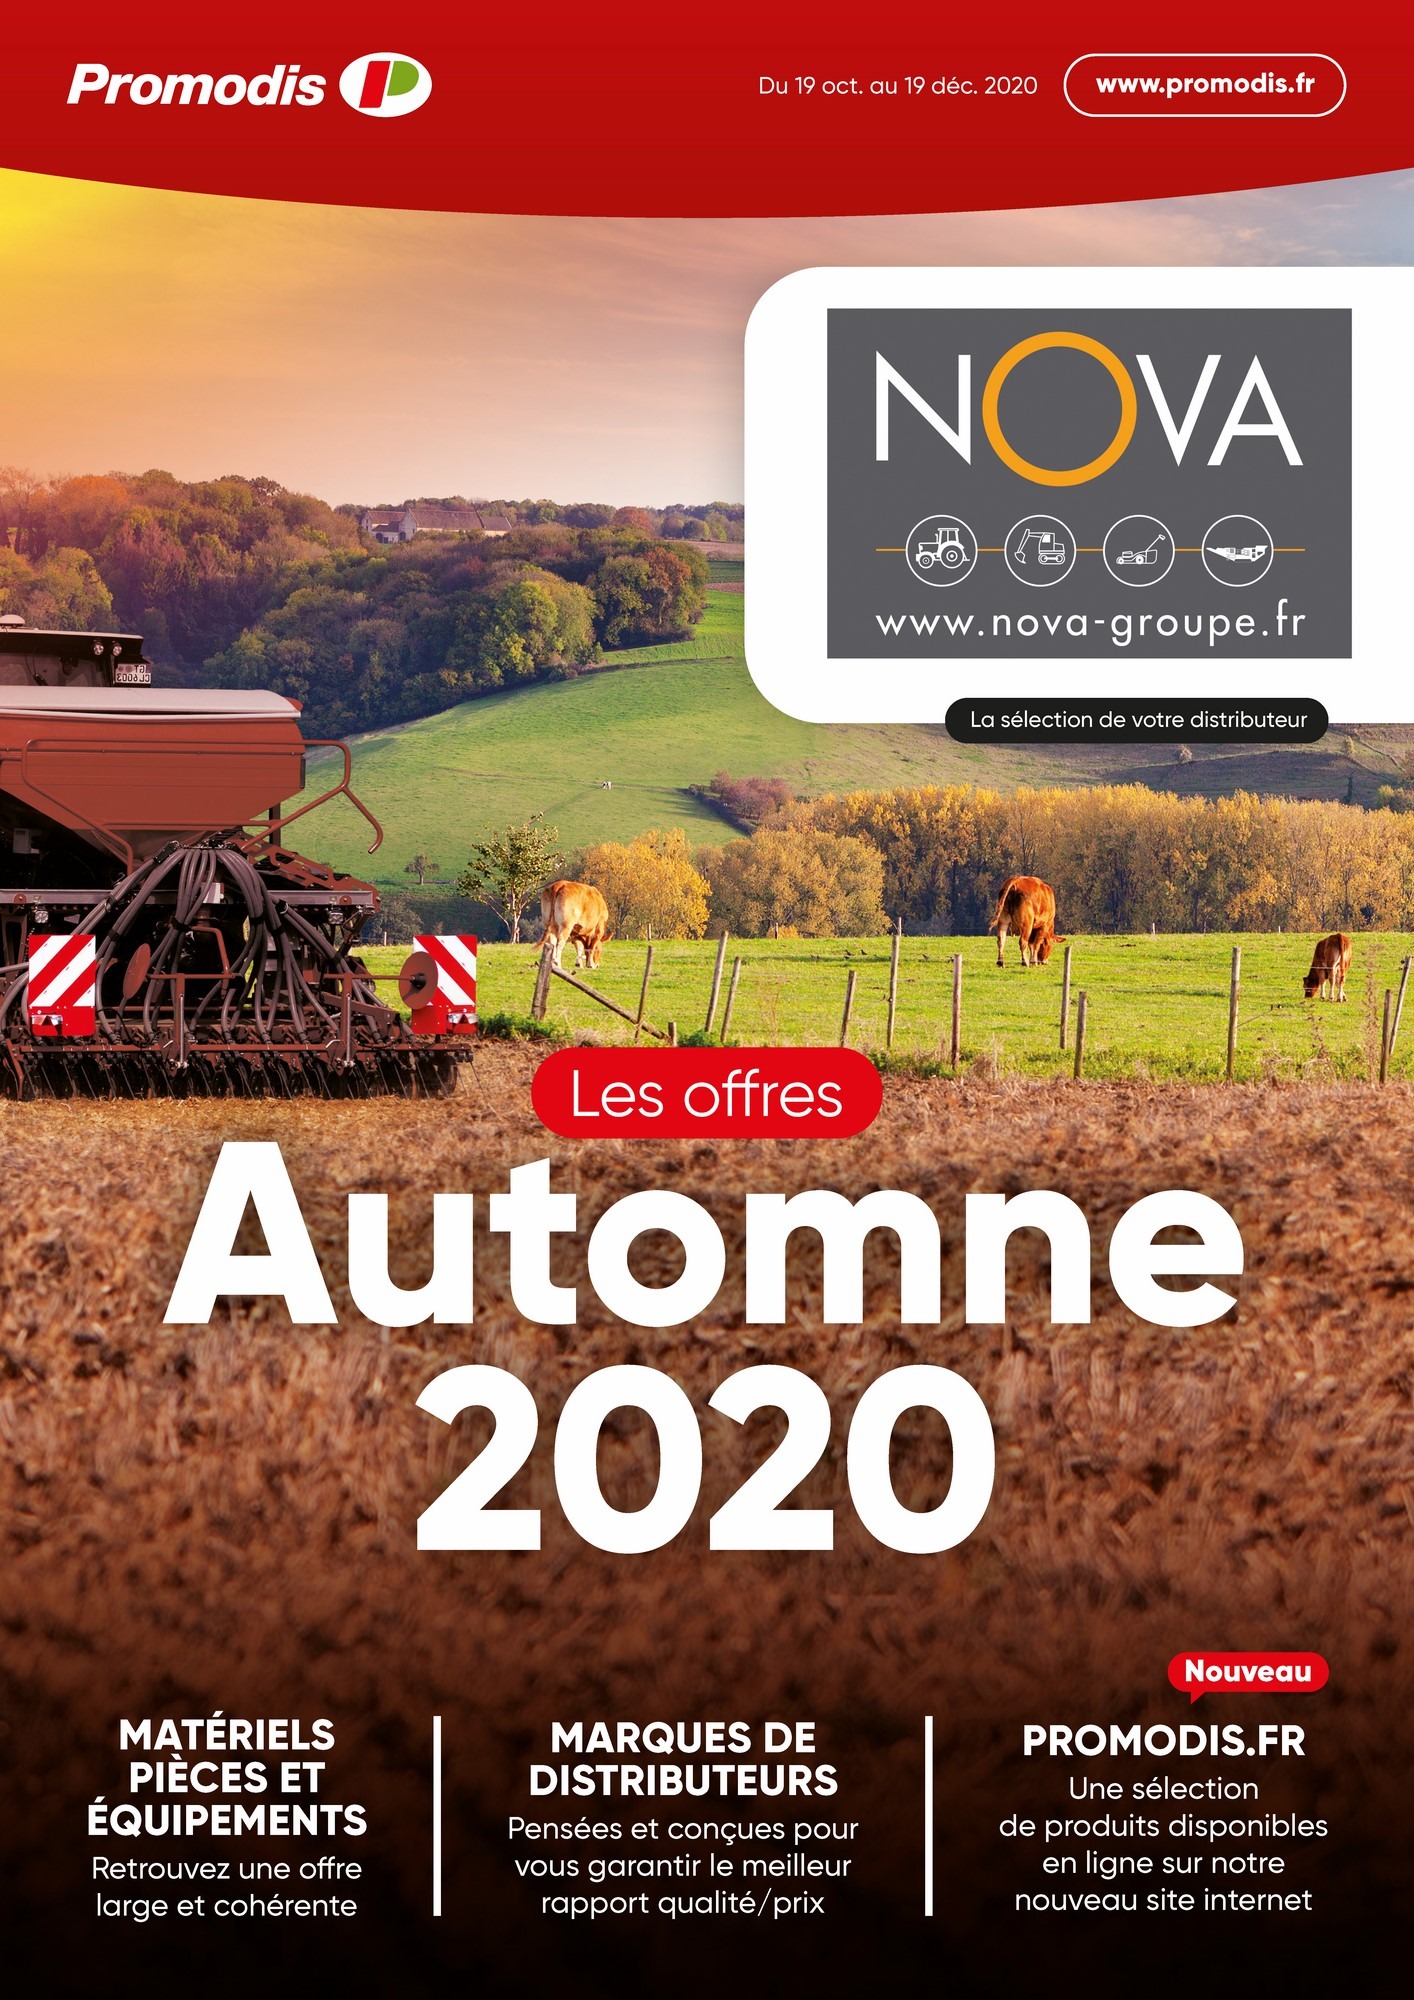 operation offres automne 2020 promodis nova materiel agricole region paca